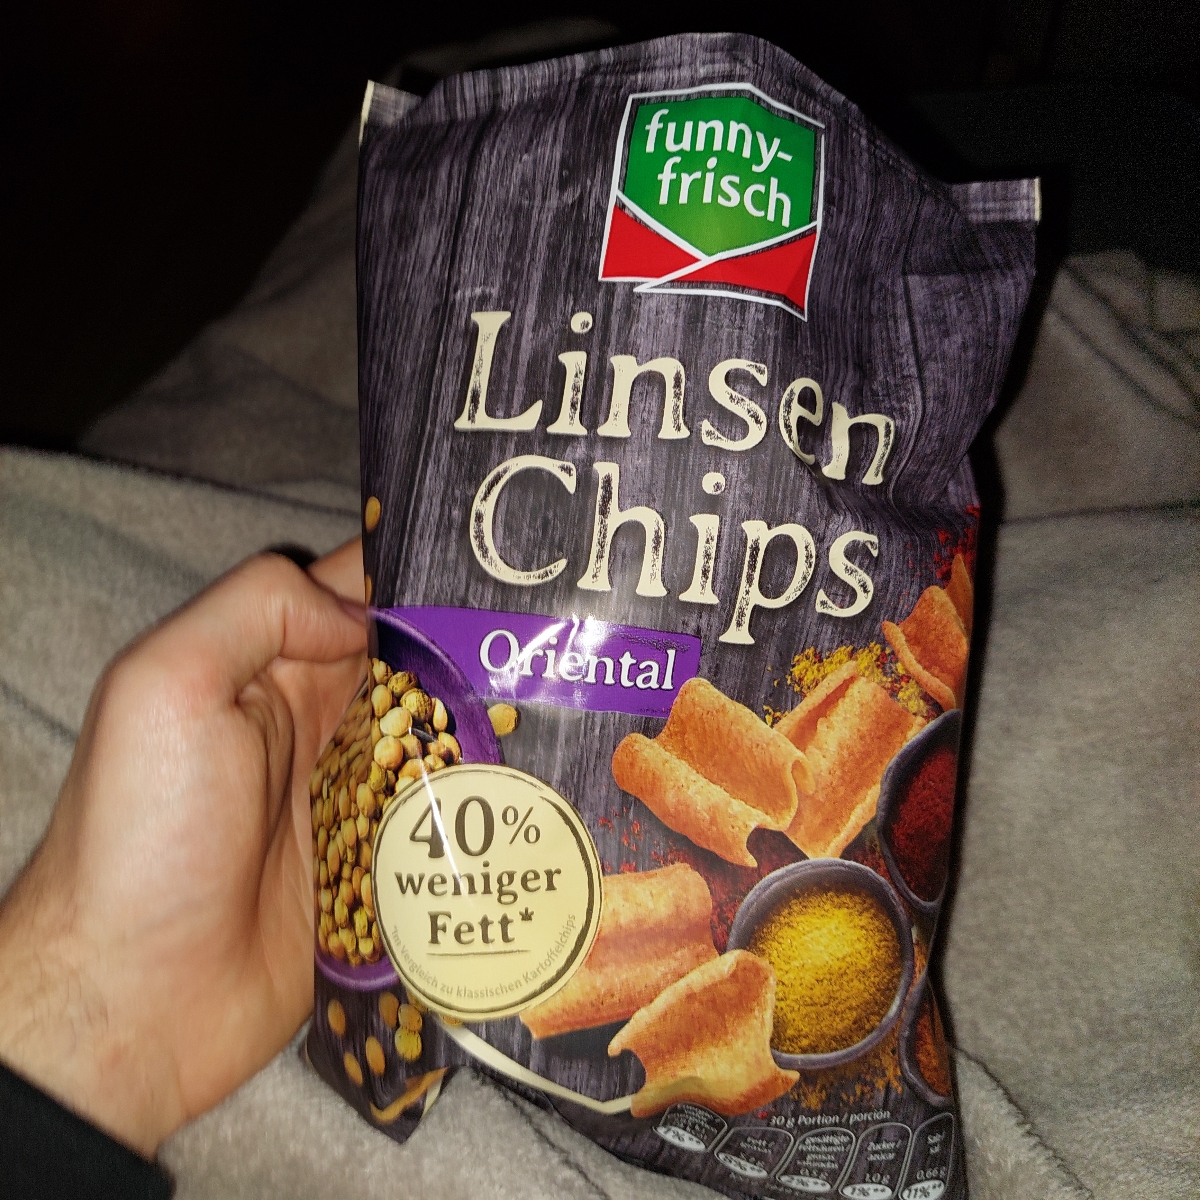 Funny-frisch Linsen Chips Oriental Review